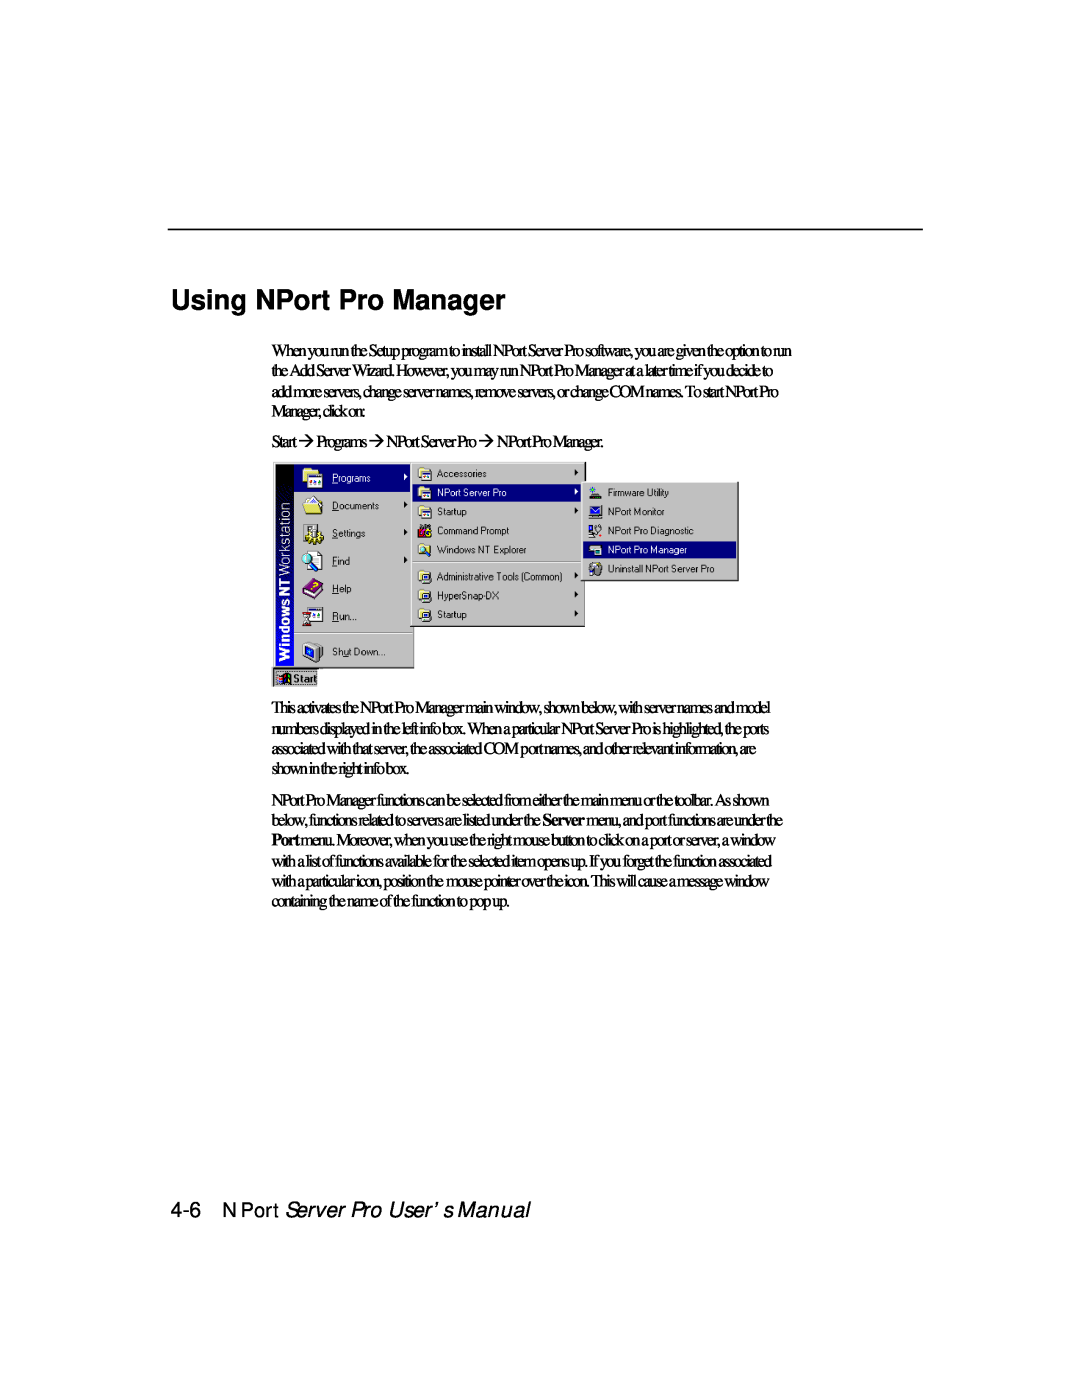 Moxa Technologies DE-303, DE-308 manual Using NPort Pro Manager, NPort Server Pro User’s Manual 